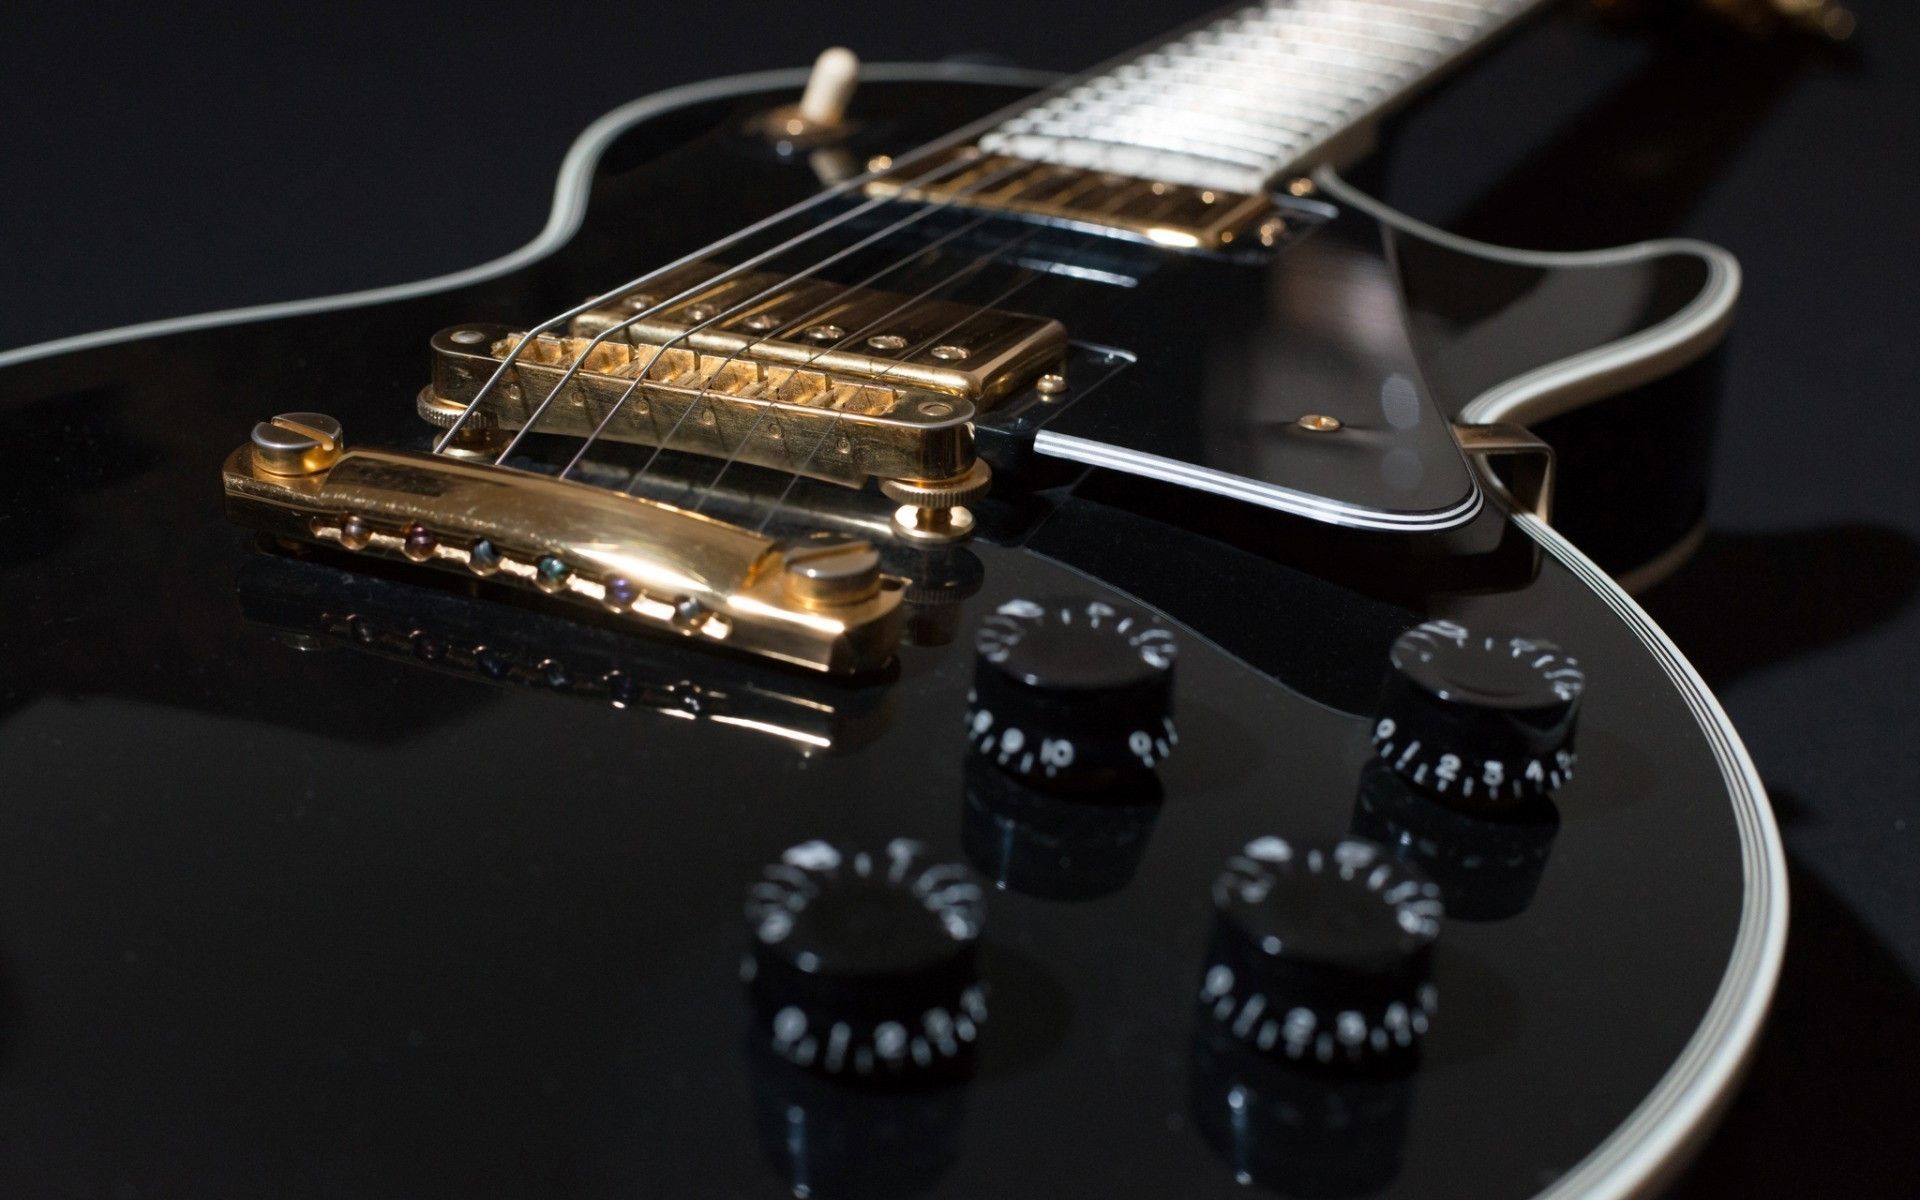 Gibson Guitar Wallpapers For Desktop